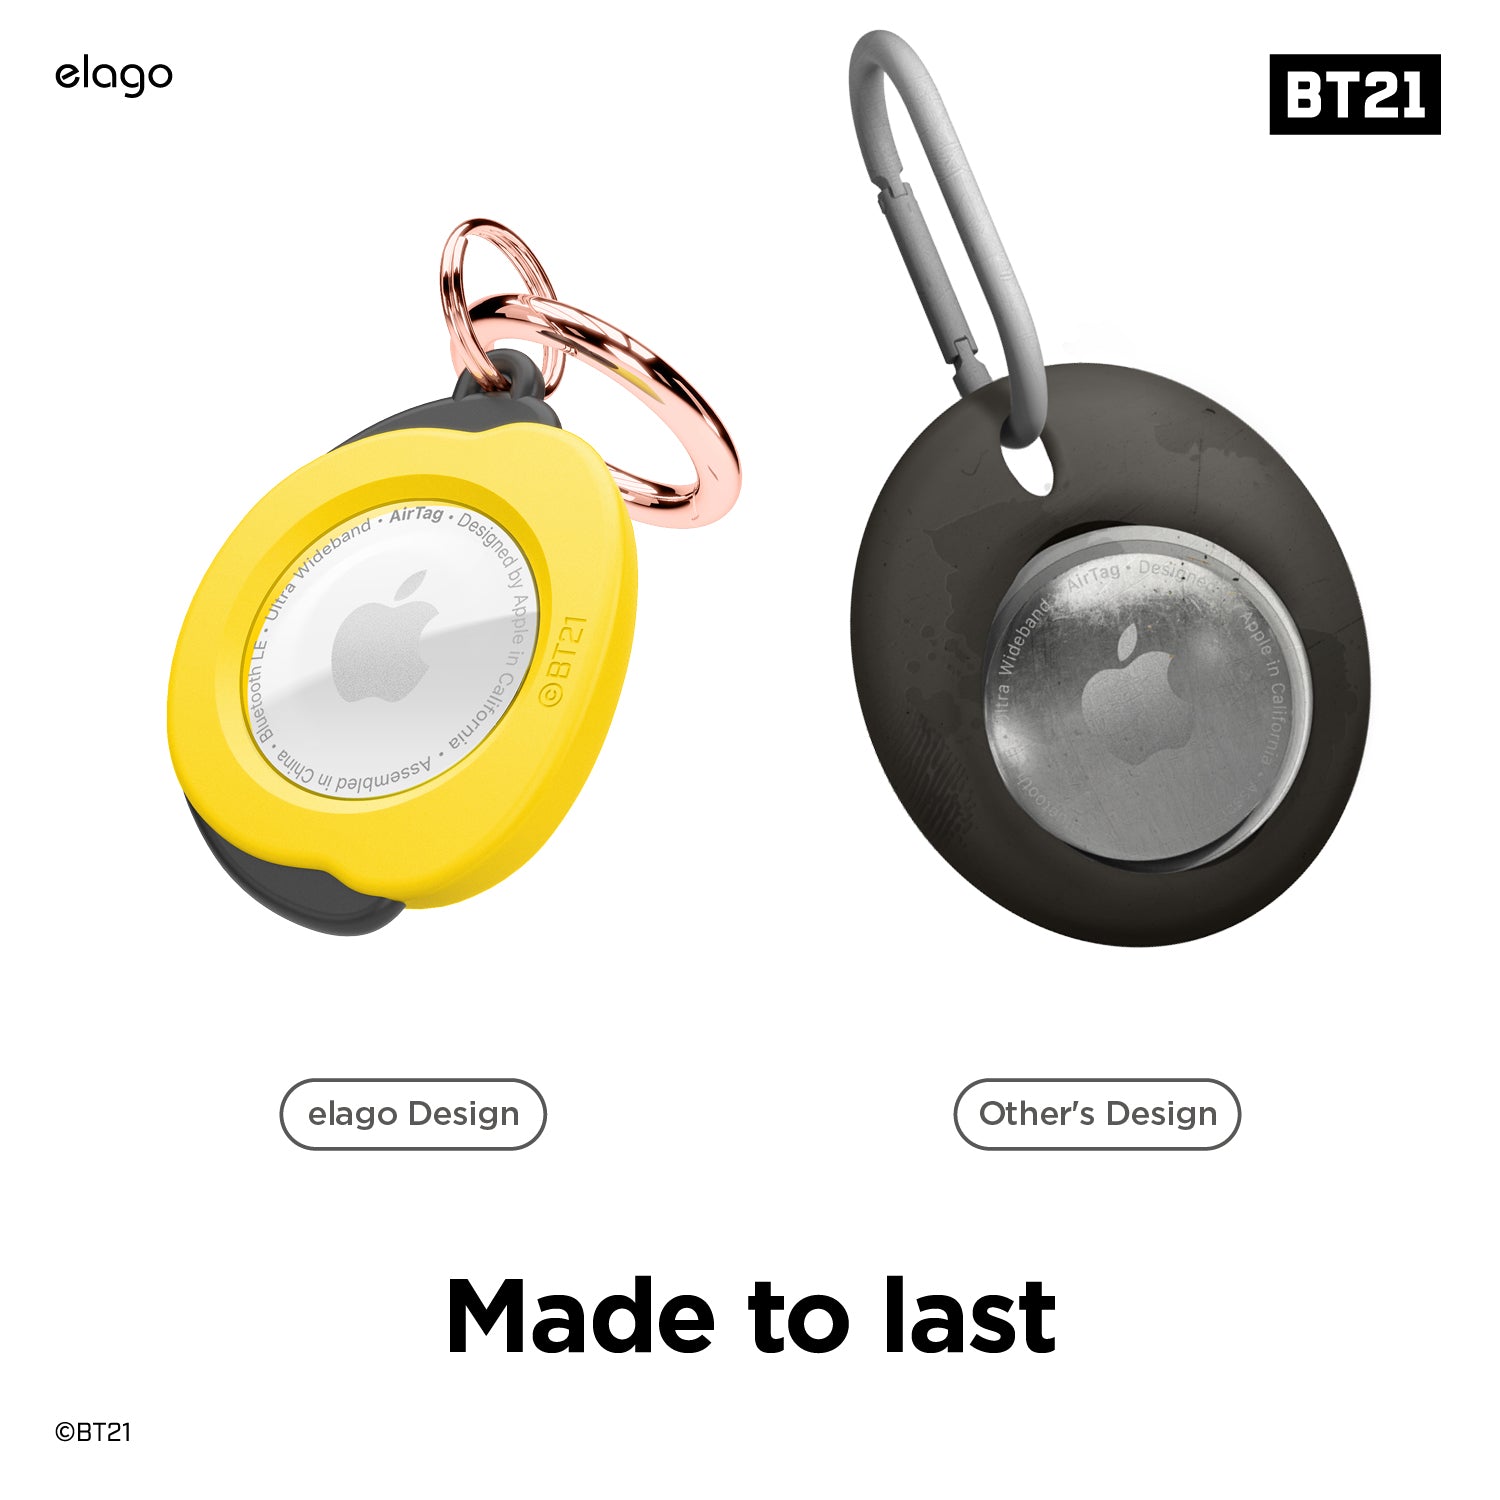 elago W7 Shuffle Case for AirTag [2 Colors] Mint